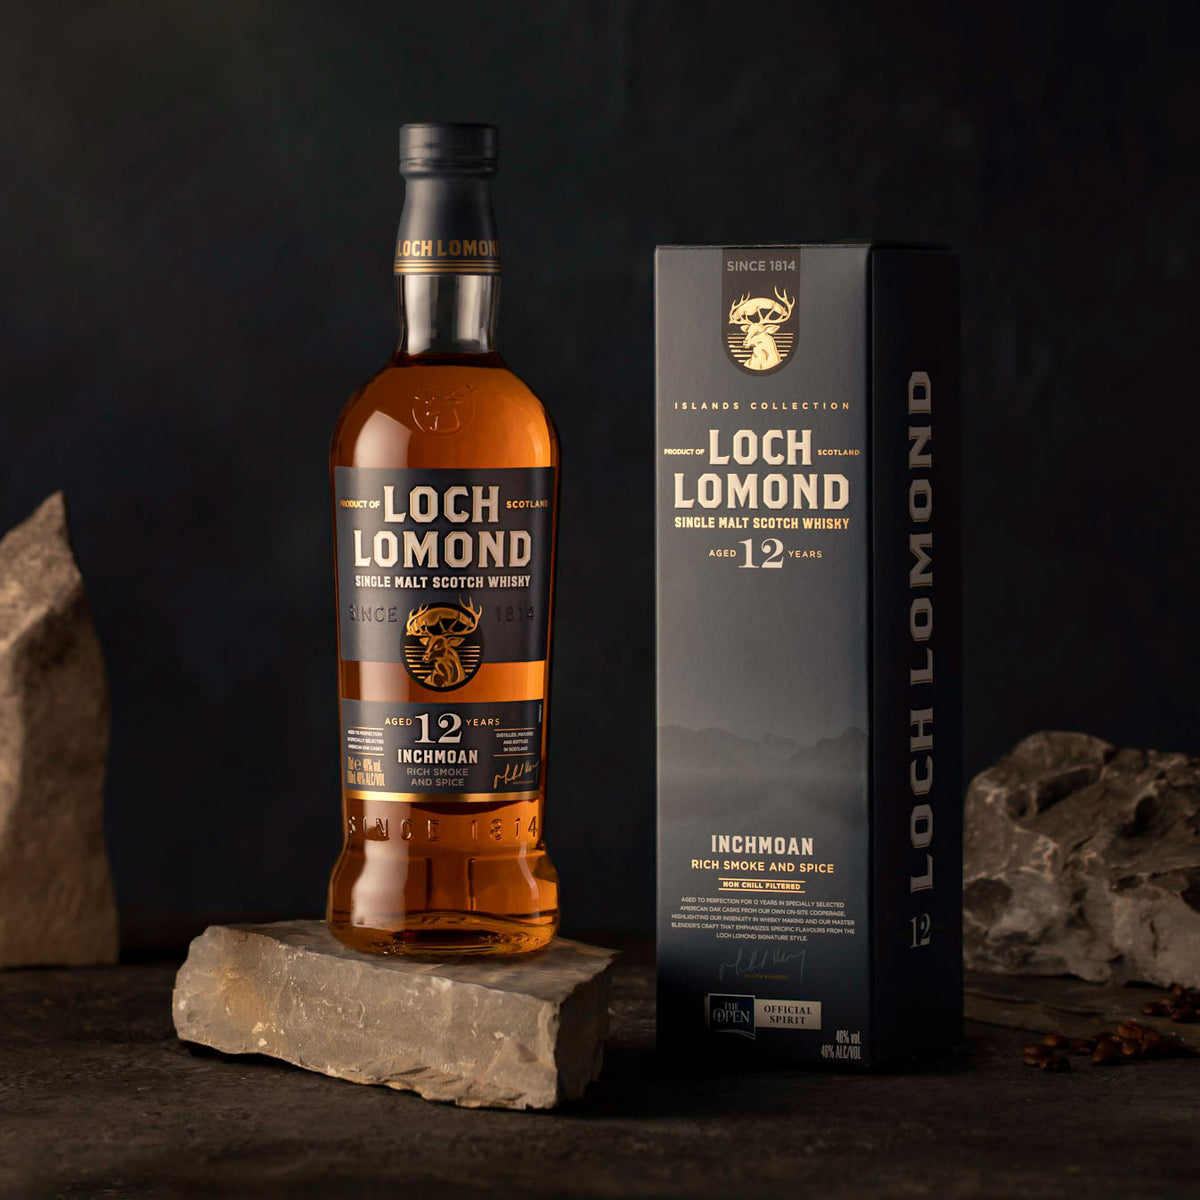 Loch Lomond Inchmoan Whisky and box